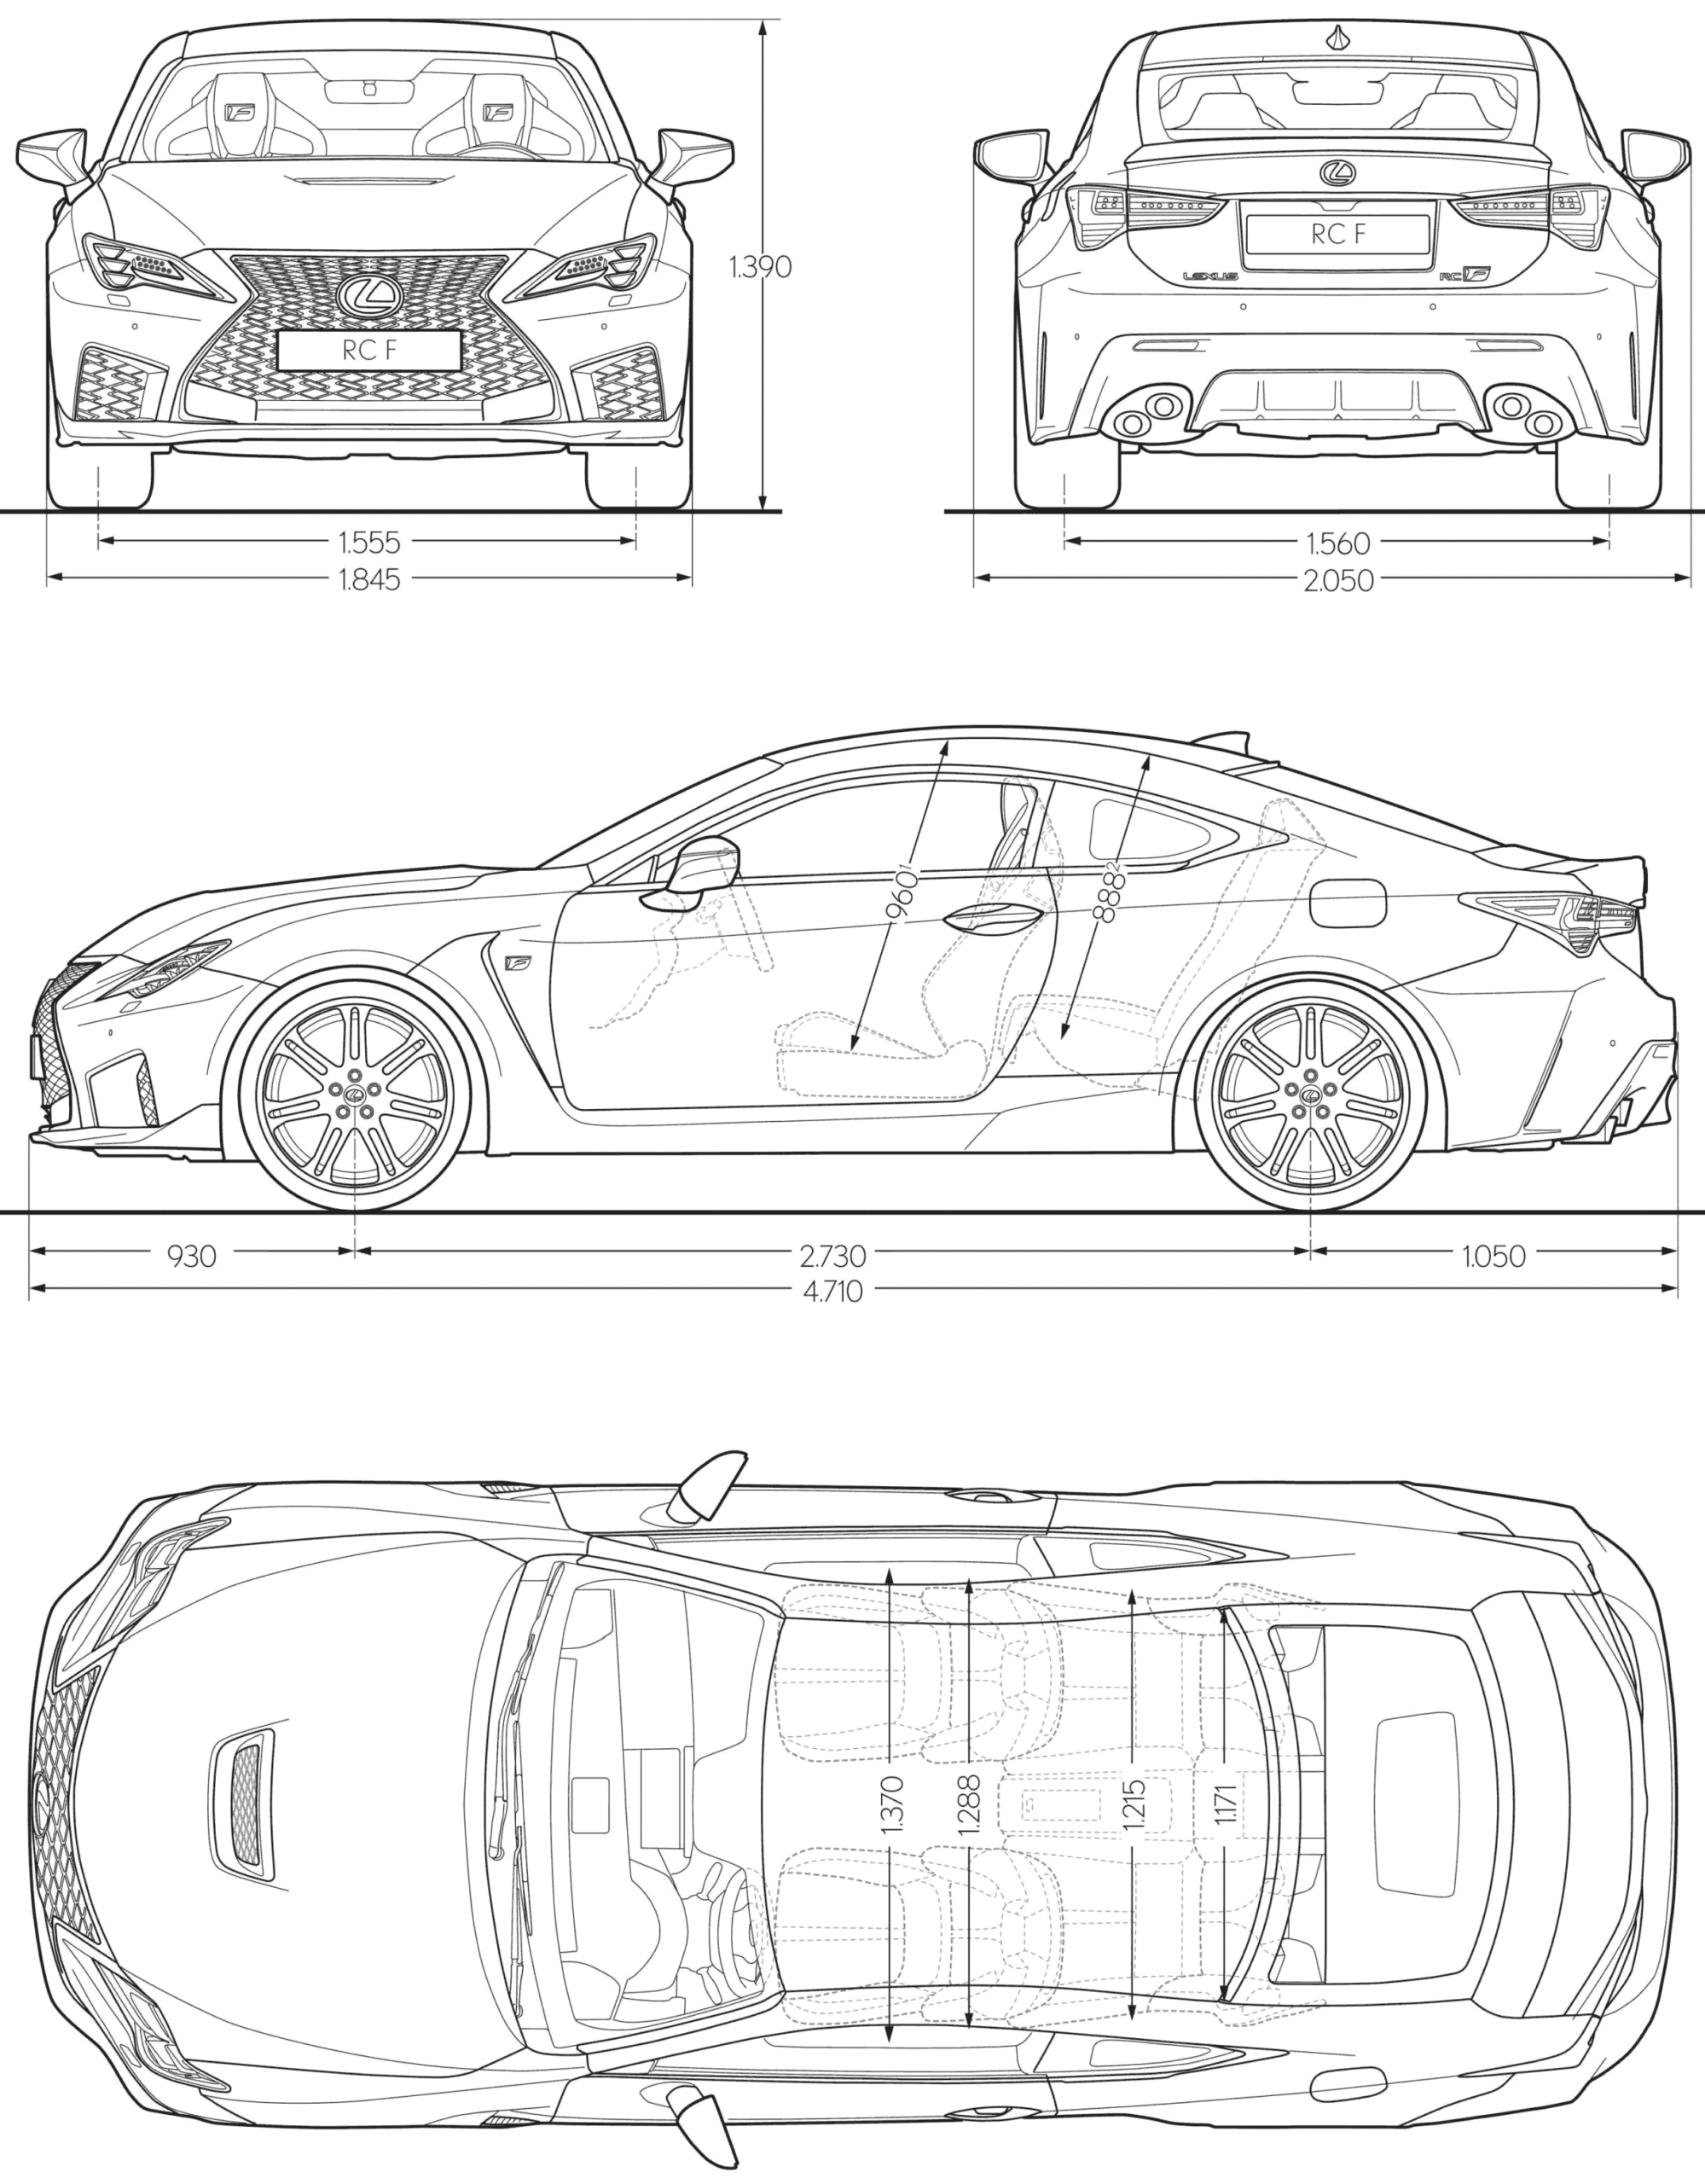 Lexus RCF blueprint